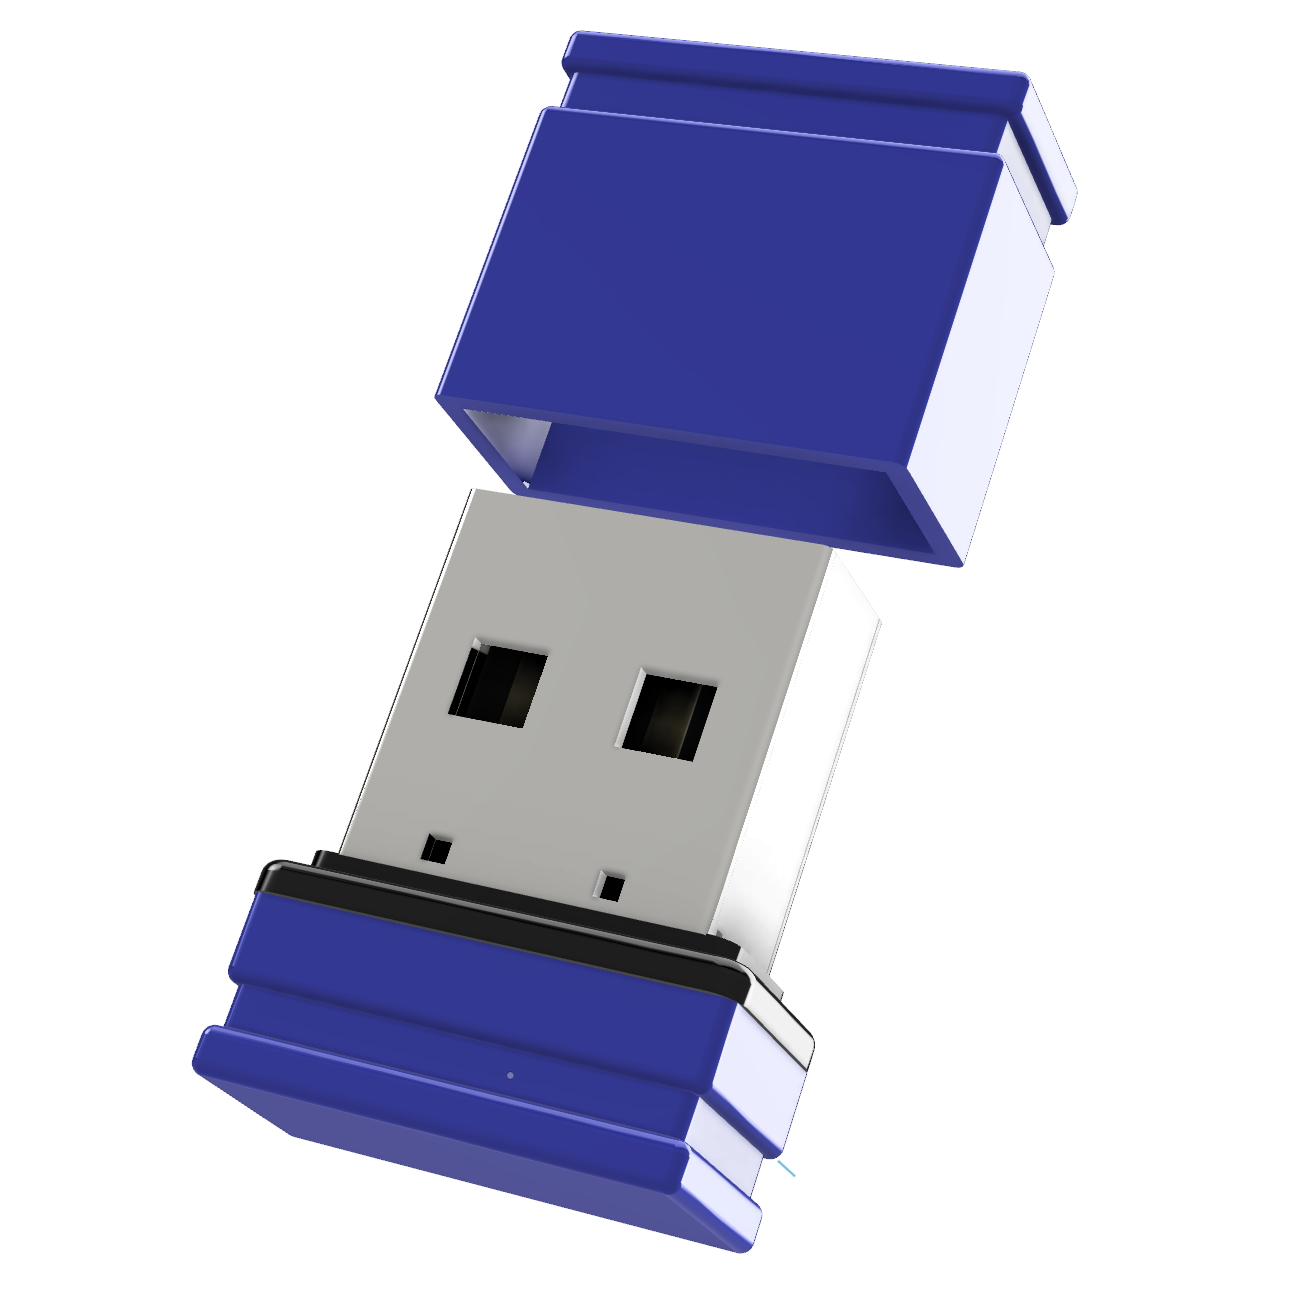 USB GERMANY ®ULTRA Mini P1 USB-Stick (Blau/Schwarz, GB) 32